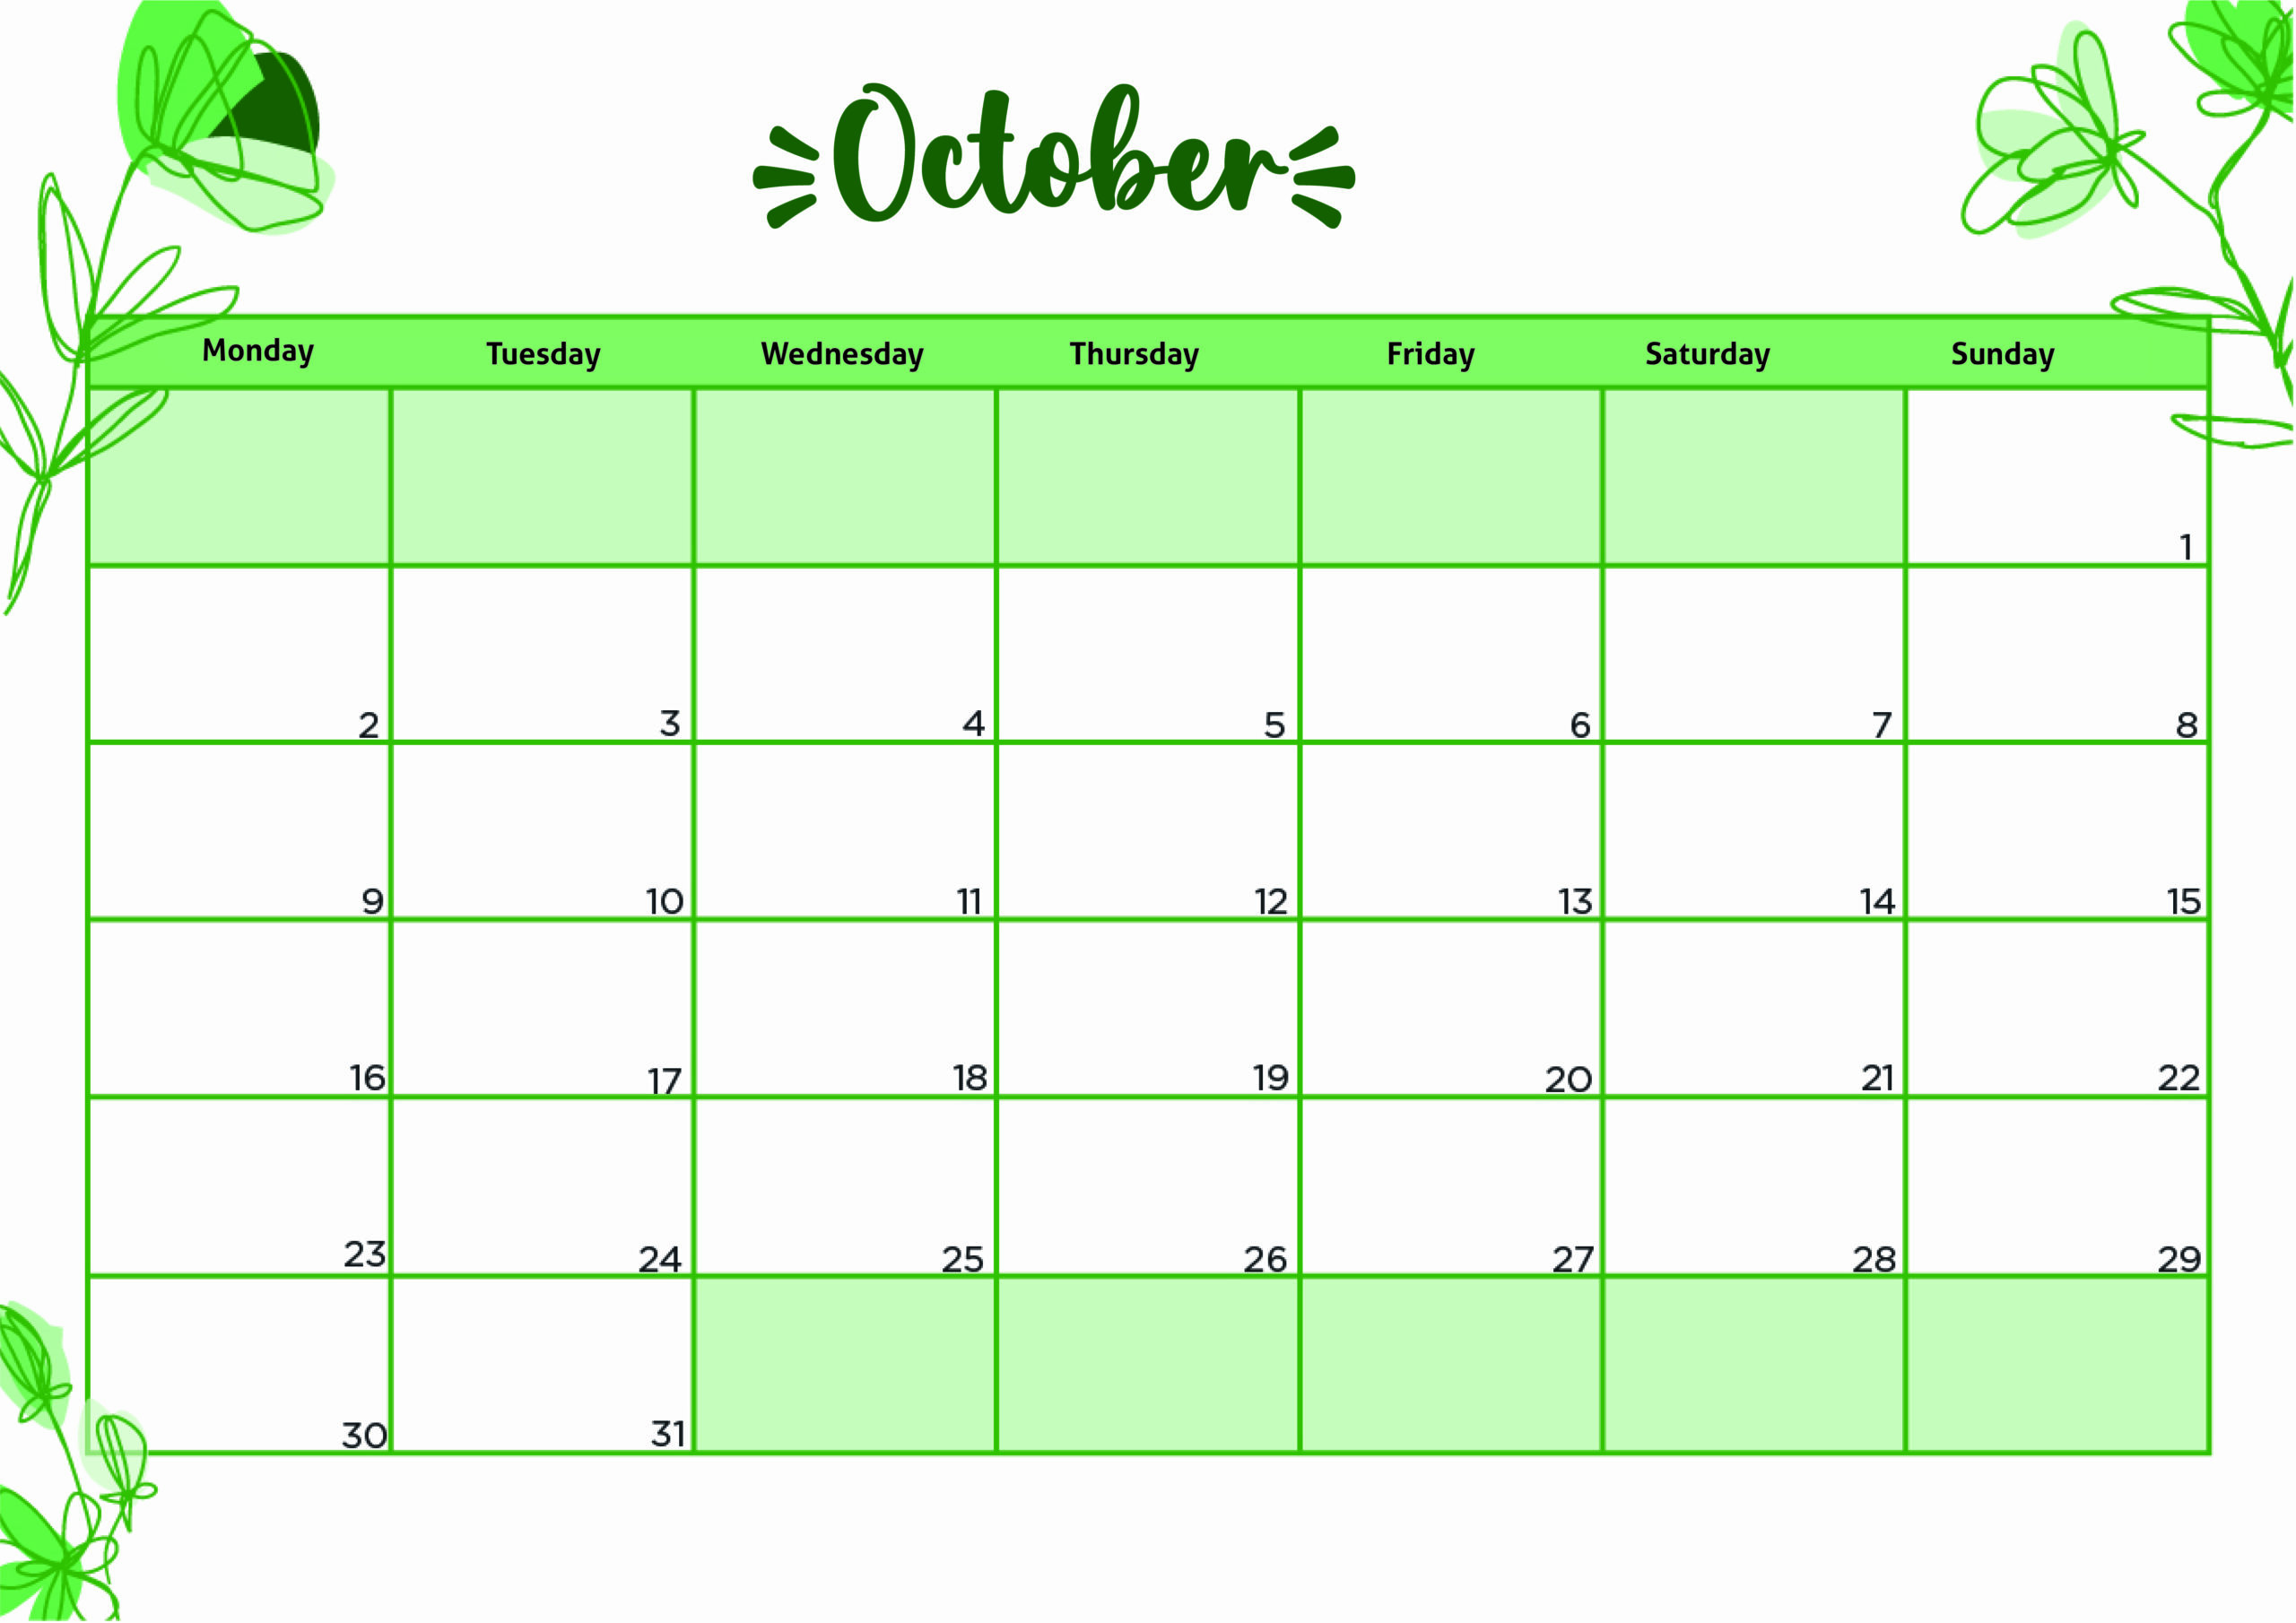 October 2023 Calendar